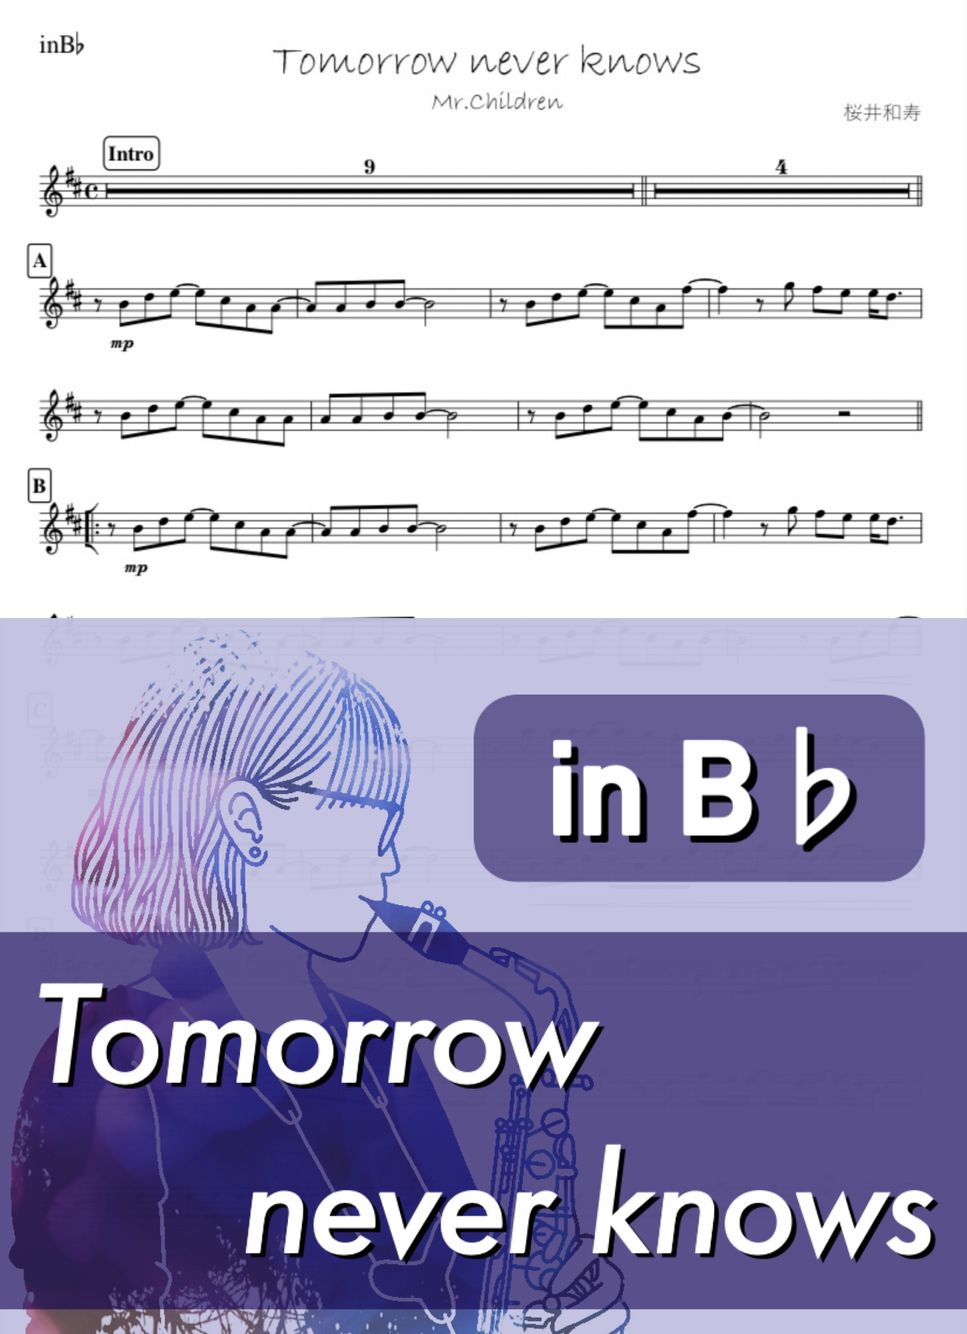 Tomorrow never knows (B♭) 楽譜 by kanamusic